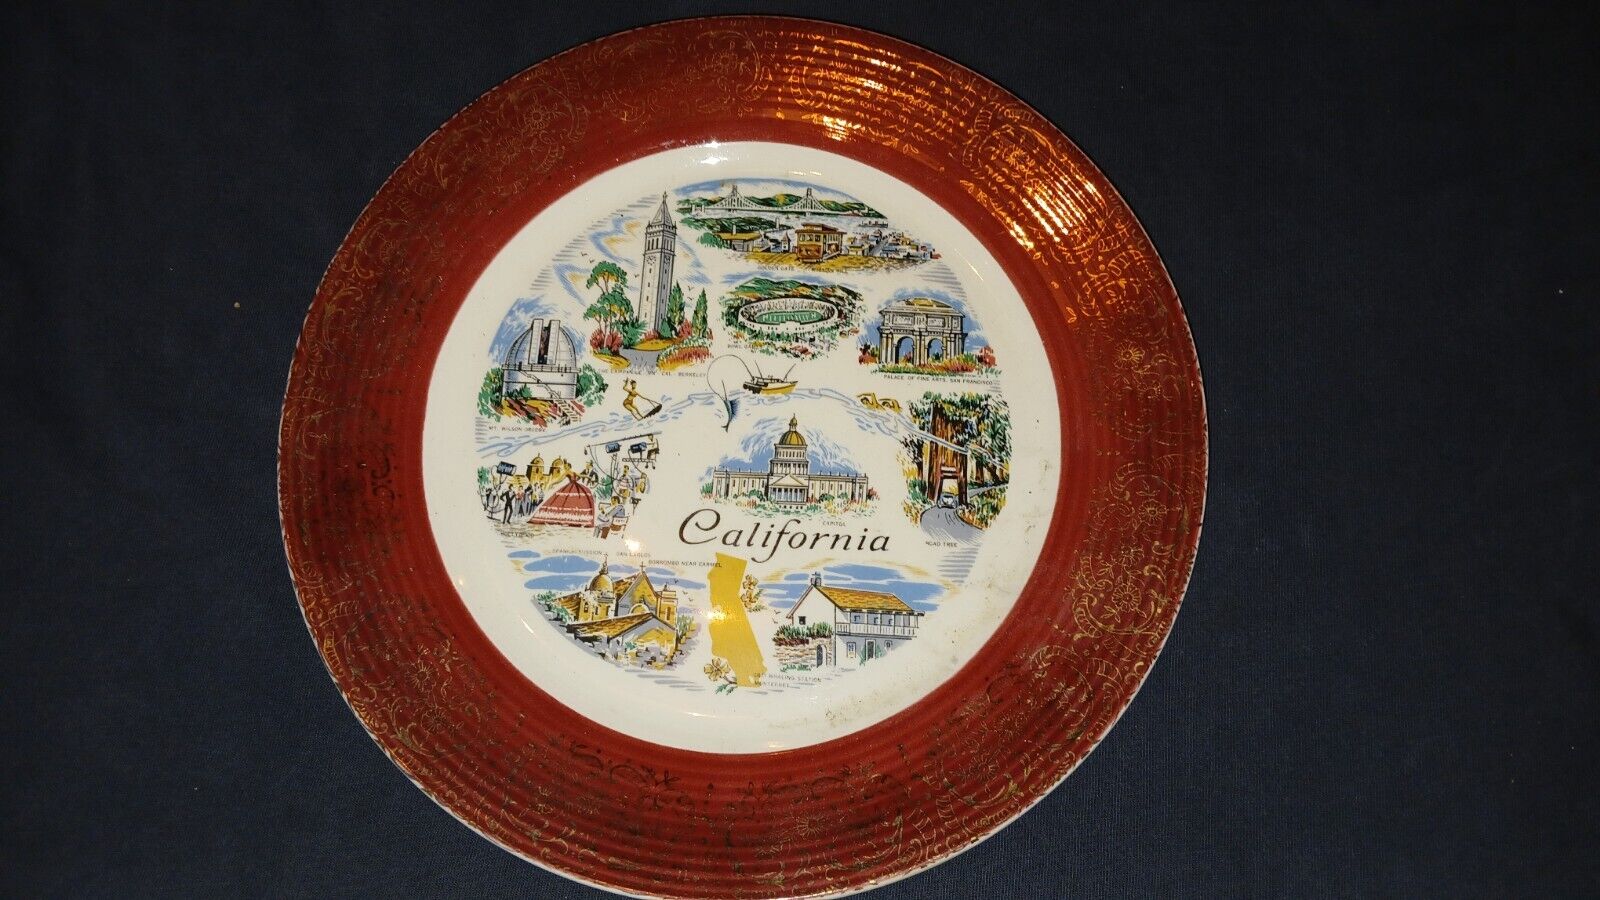 California glass souvenir plate